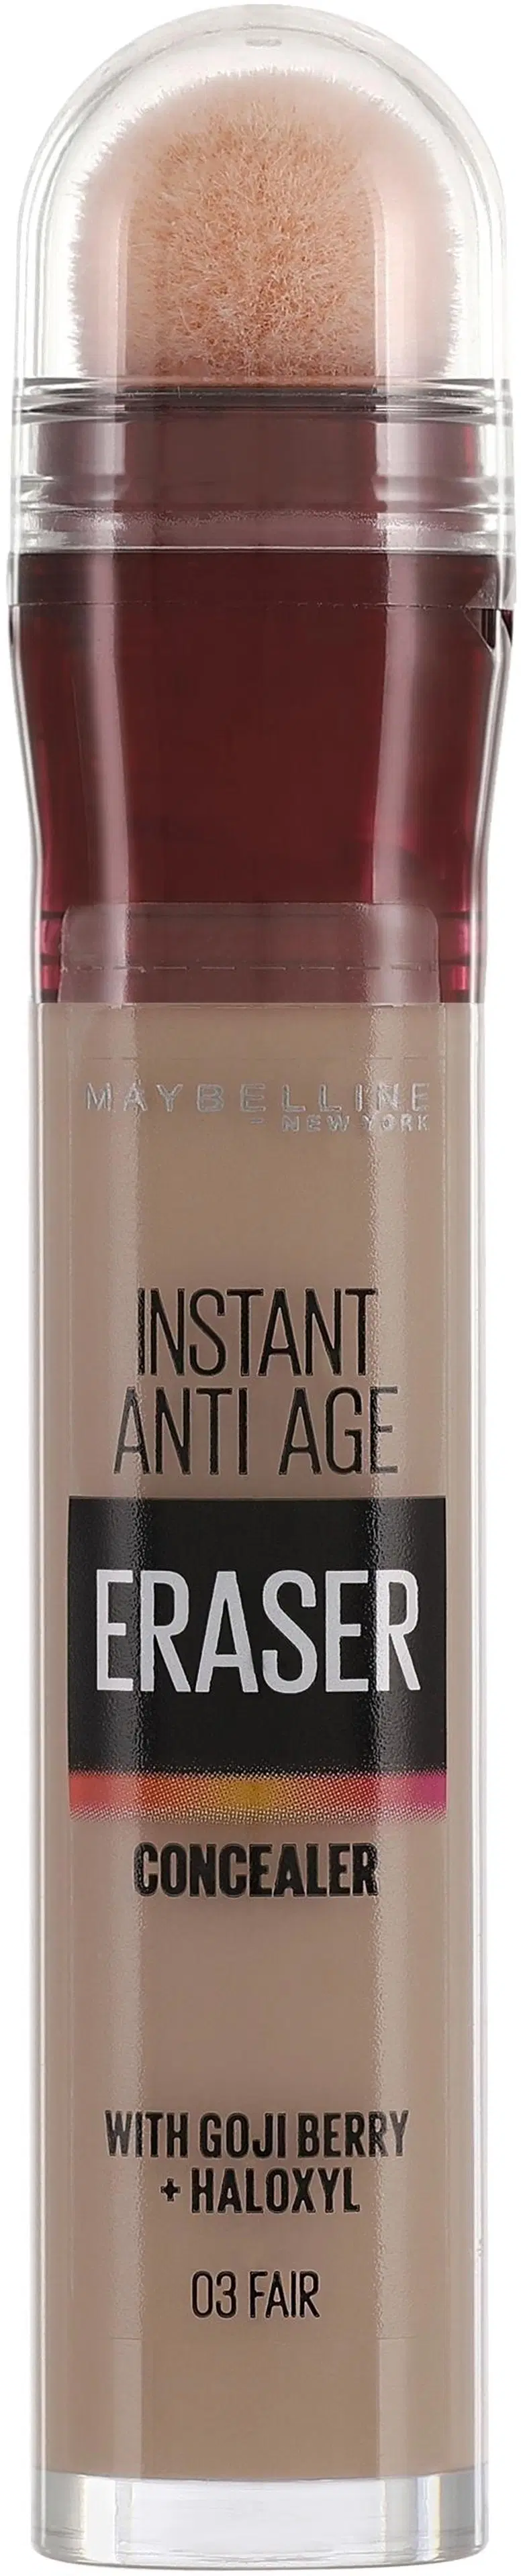 Maybelline New York Instant Anti Age Eraser 03 Fair peitevoide 6,8ml